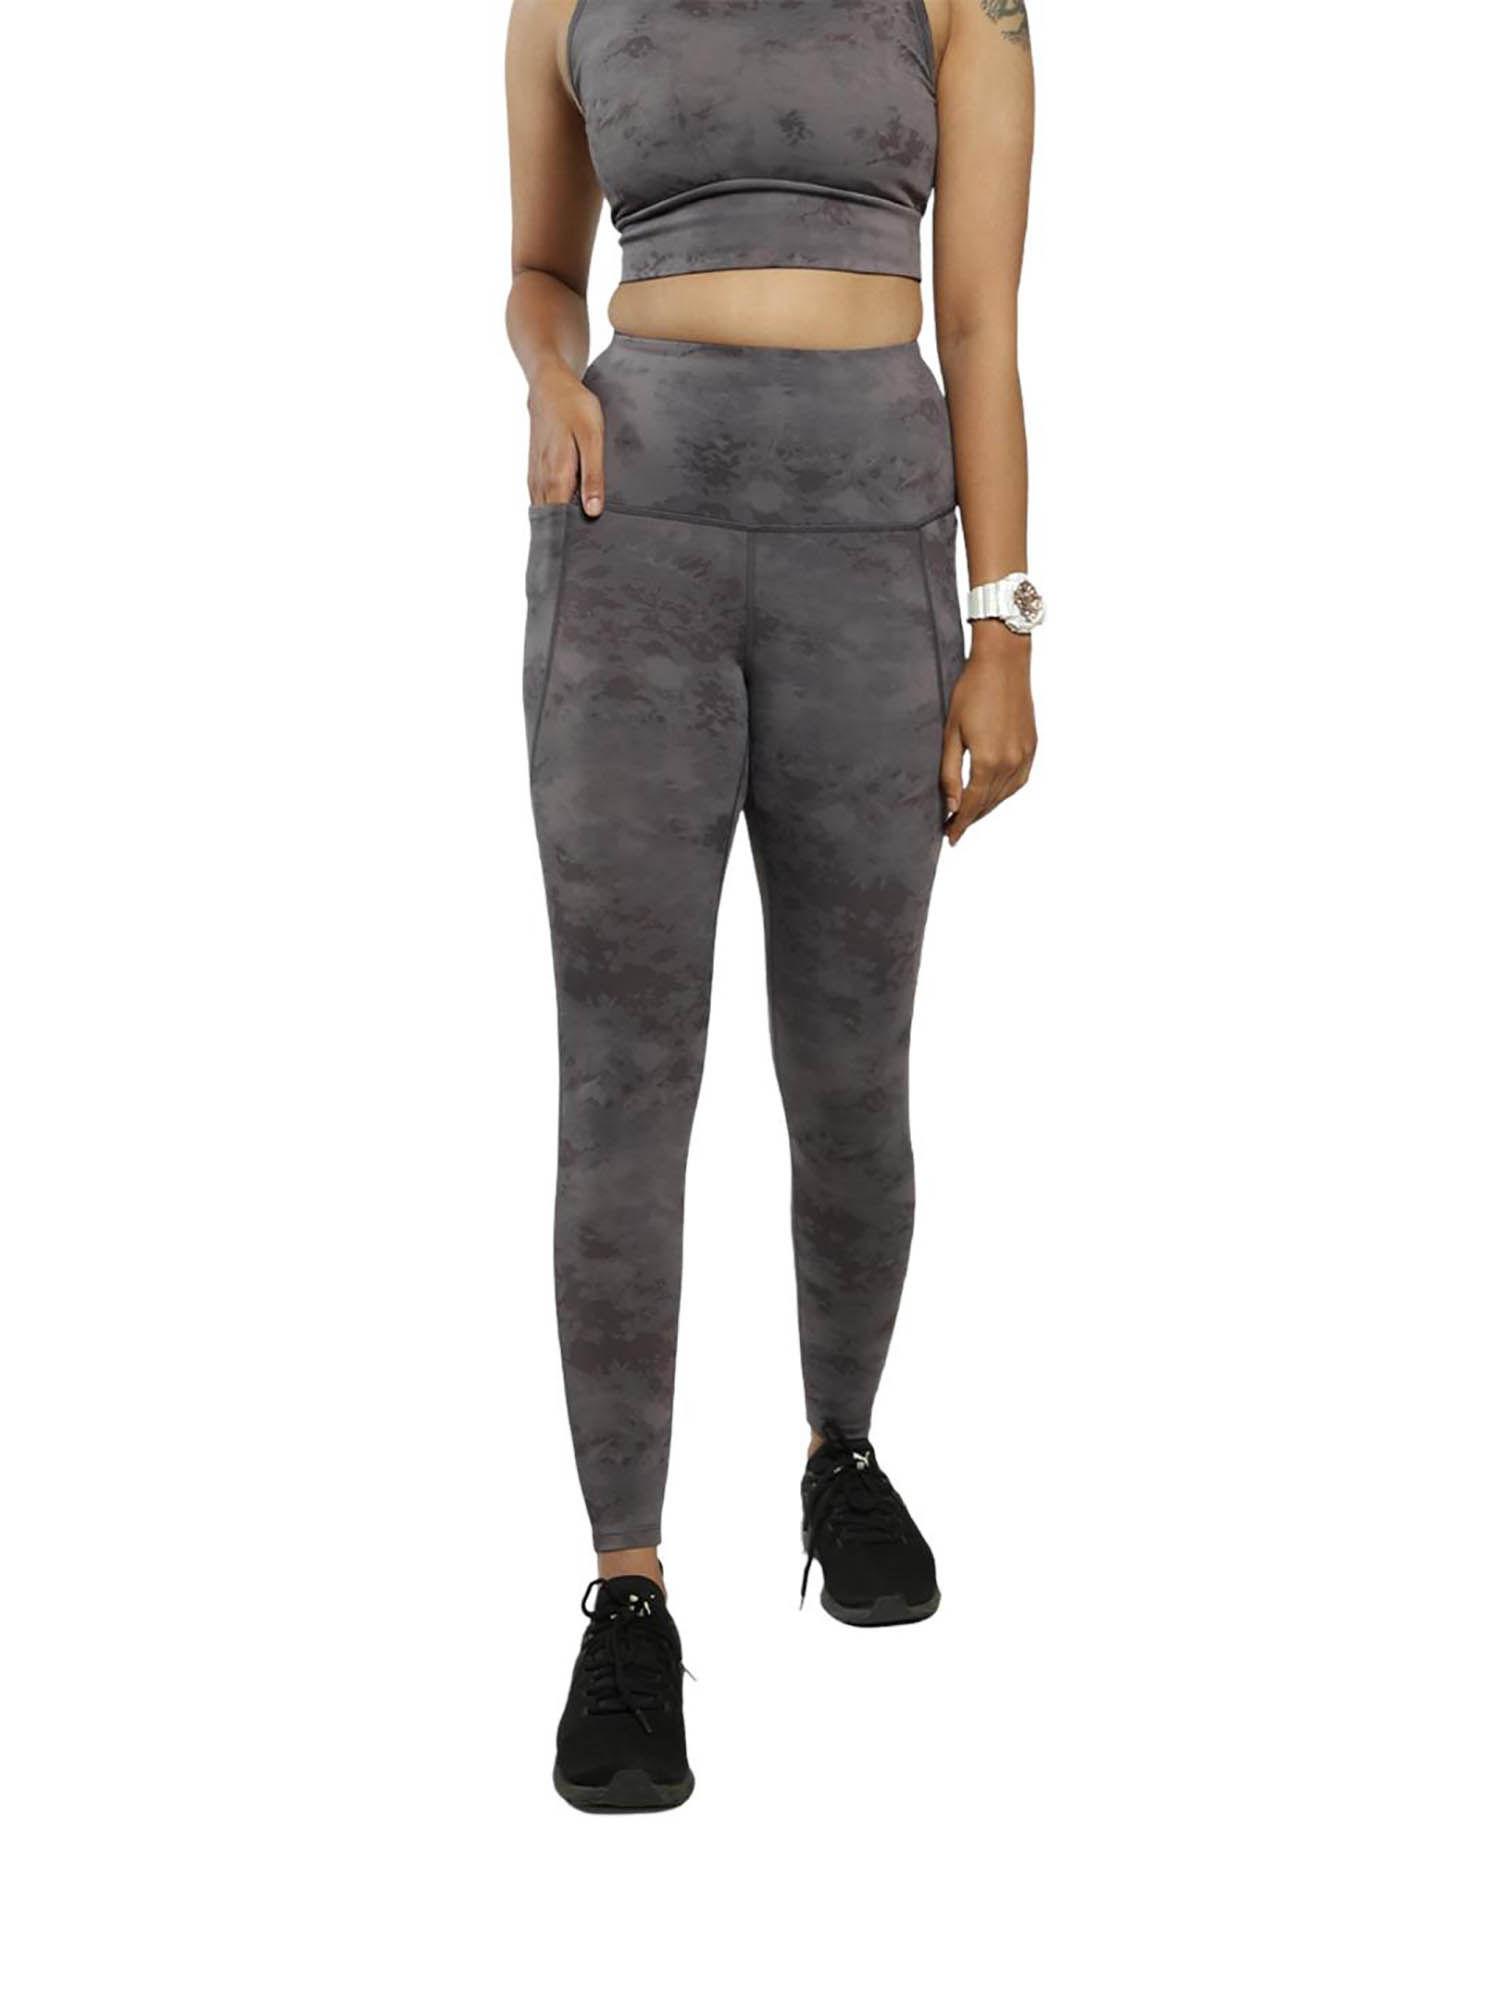 women grey high rise tie dye leggings with two side pockets